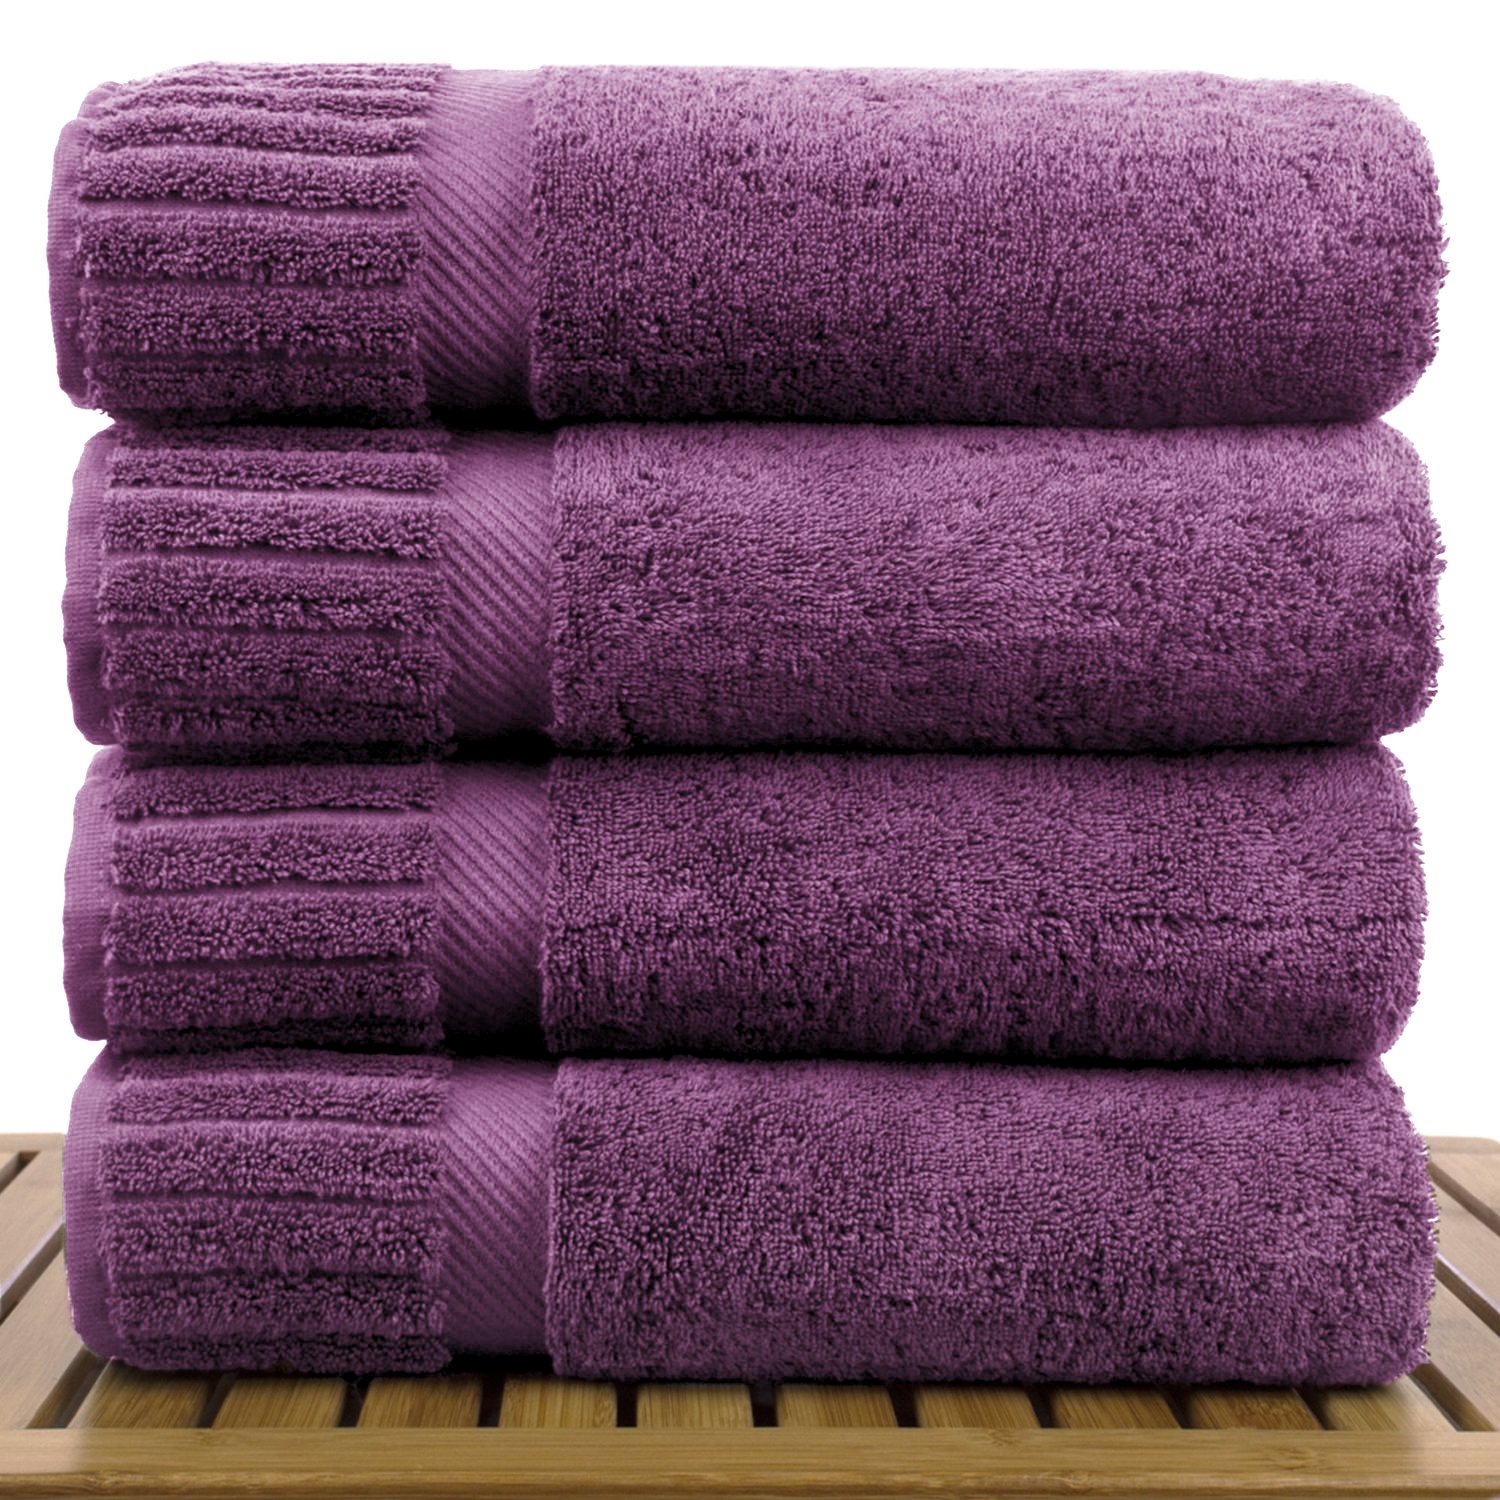 30" x 58" - 18 lbs/doz - %100 Turkish Cotton Plum Bath Towel - Piano Border-Robemart.com